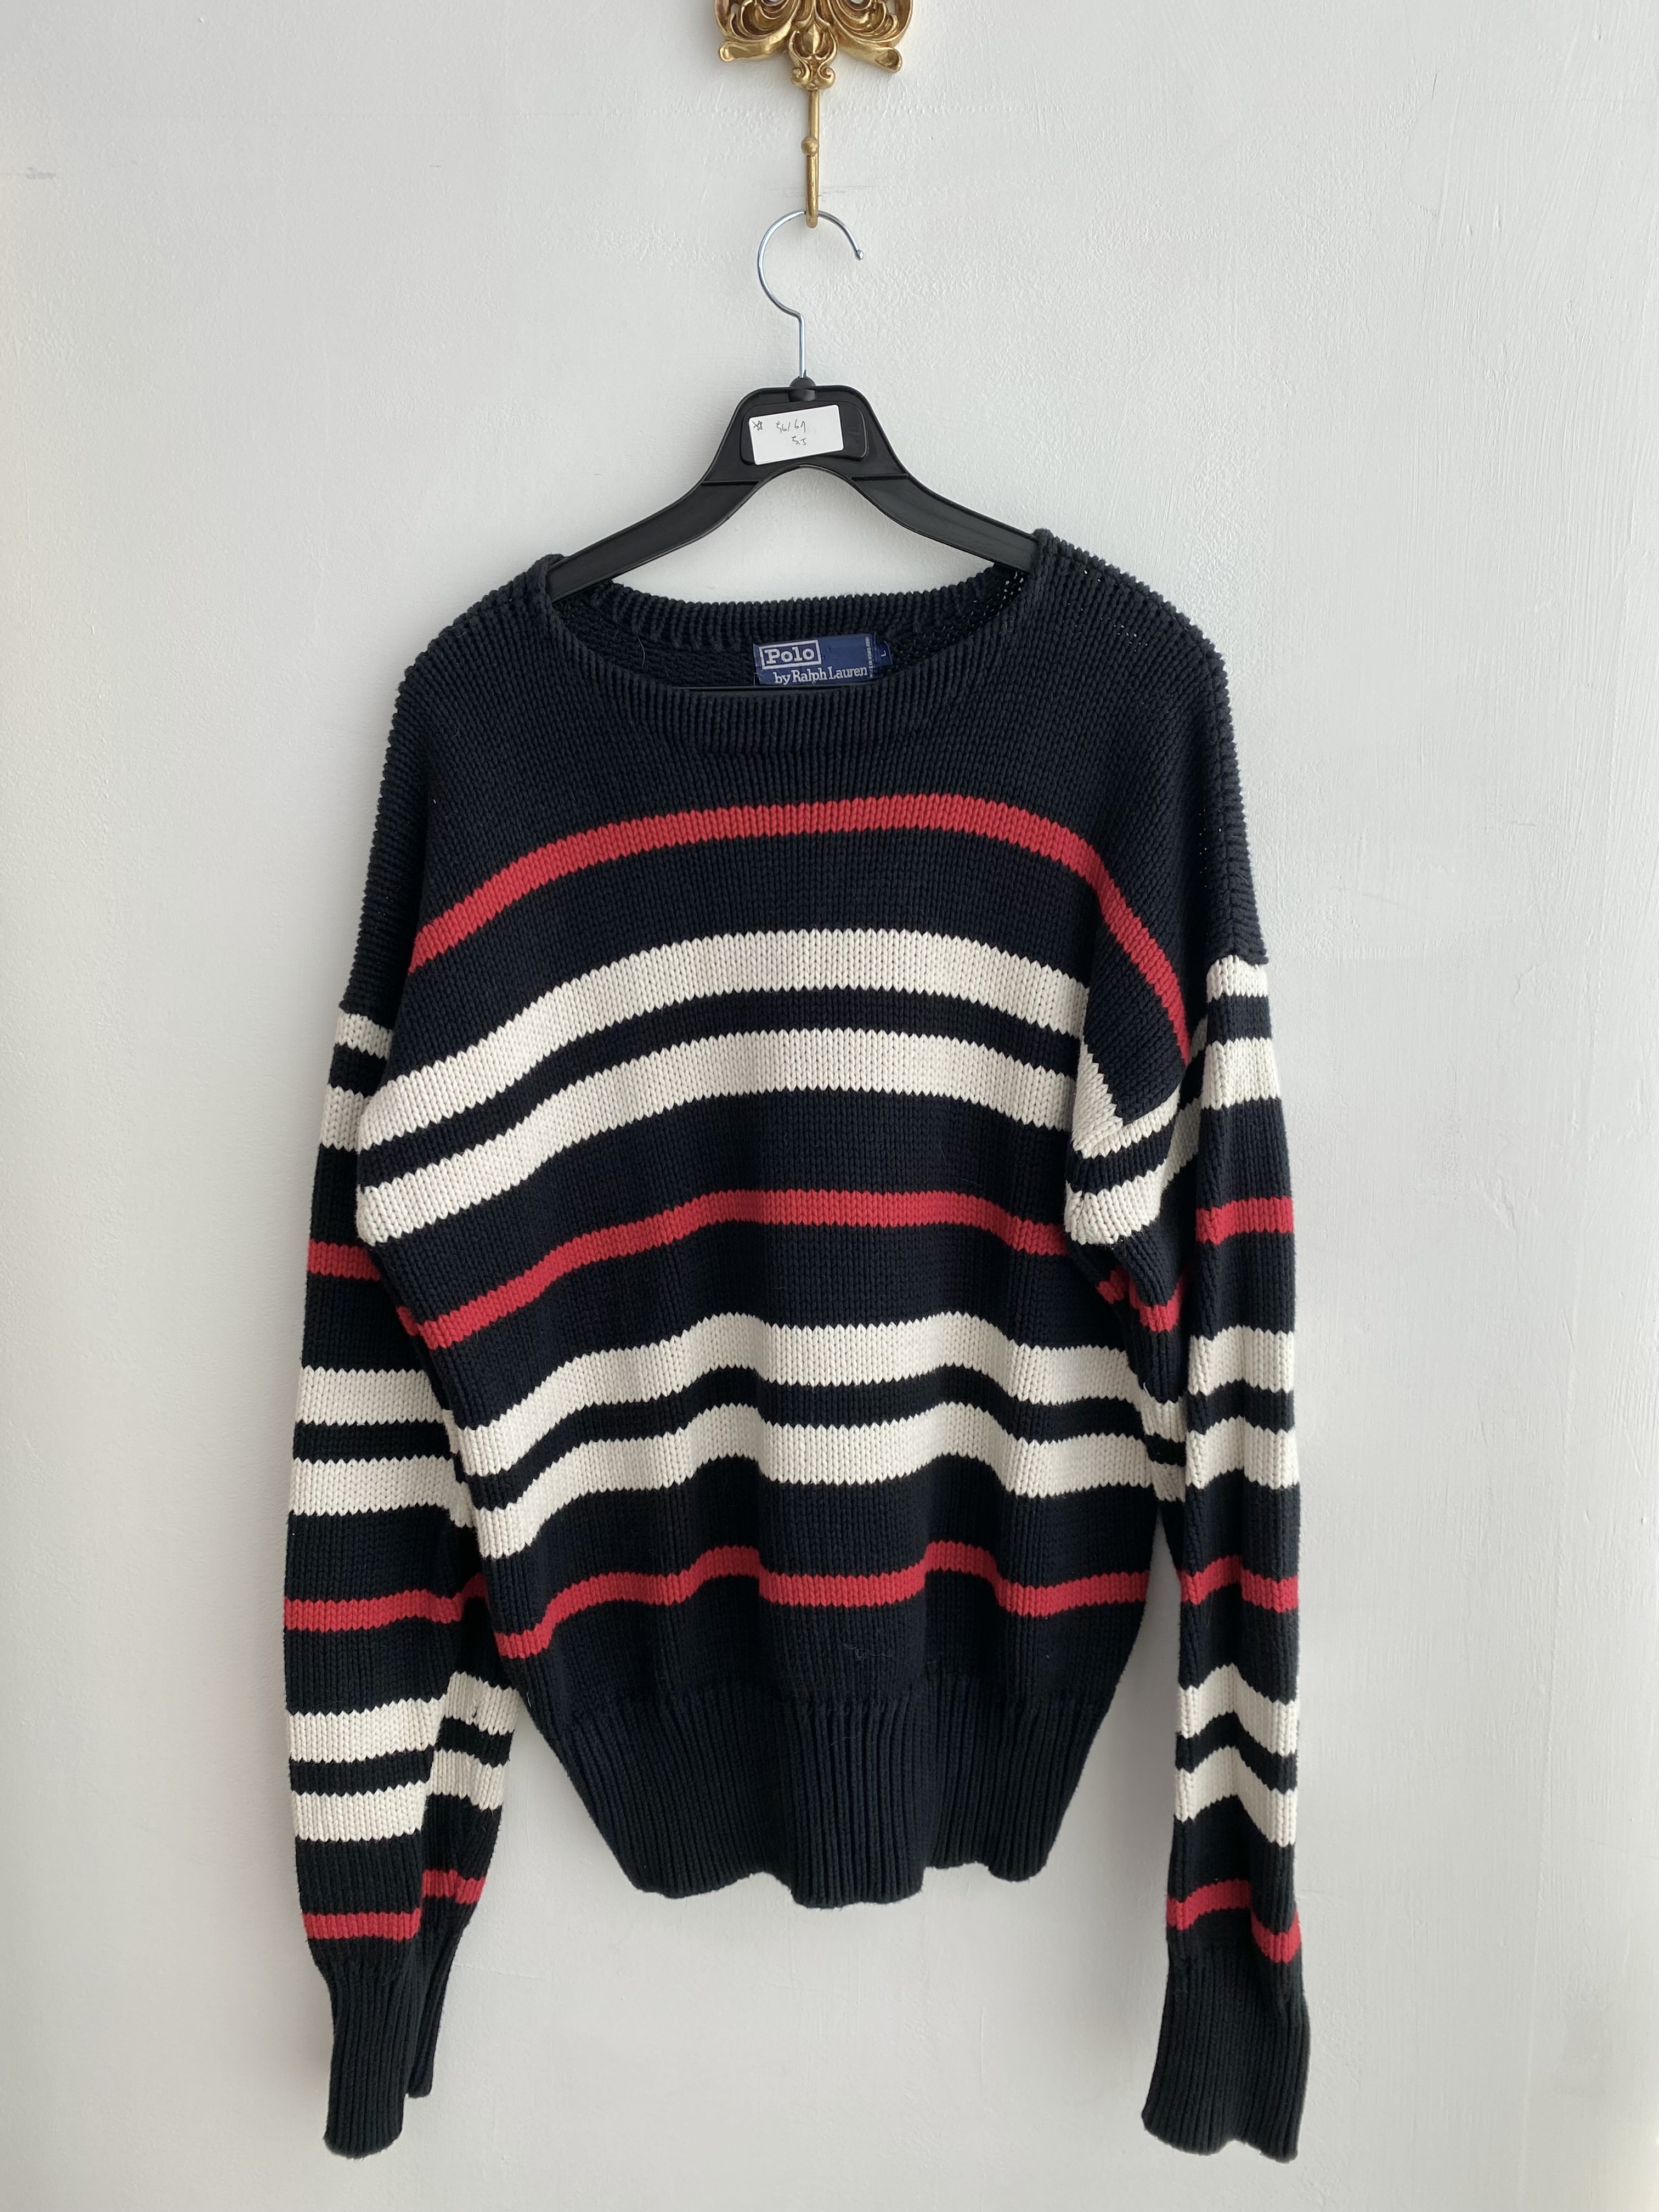 Polo Ralph Lauren black ivory red stripe cotton knit